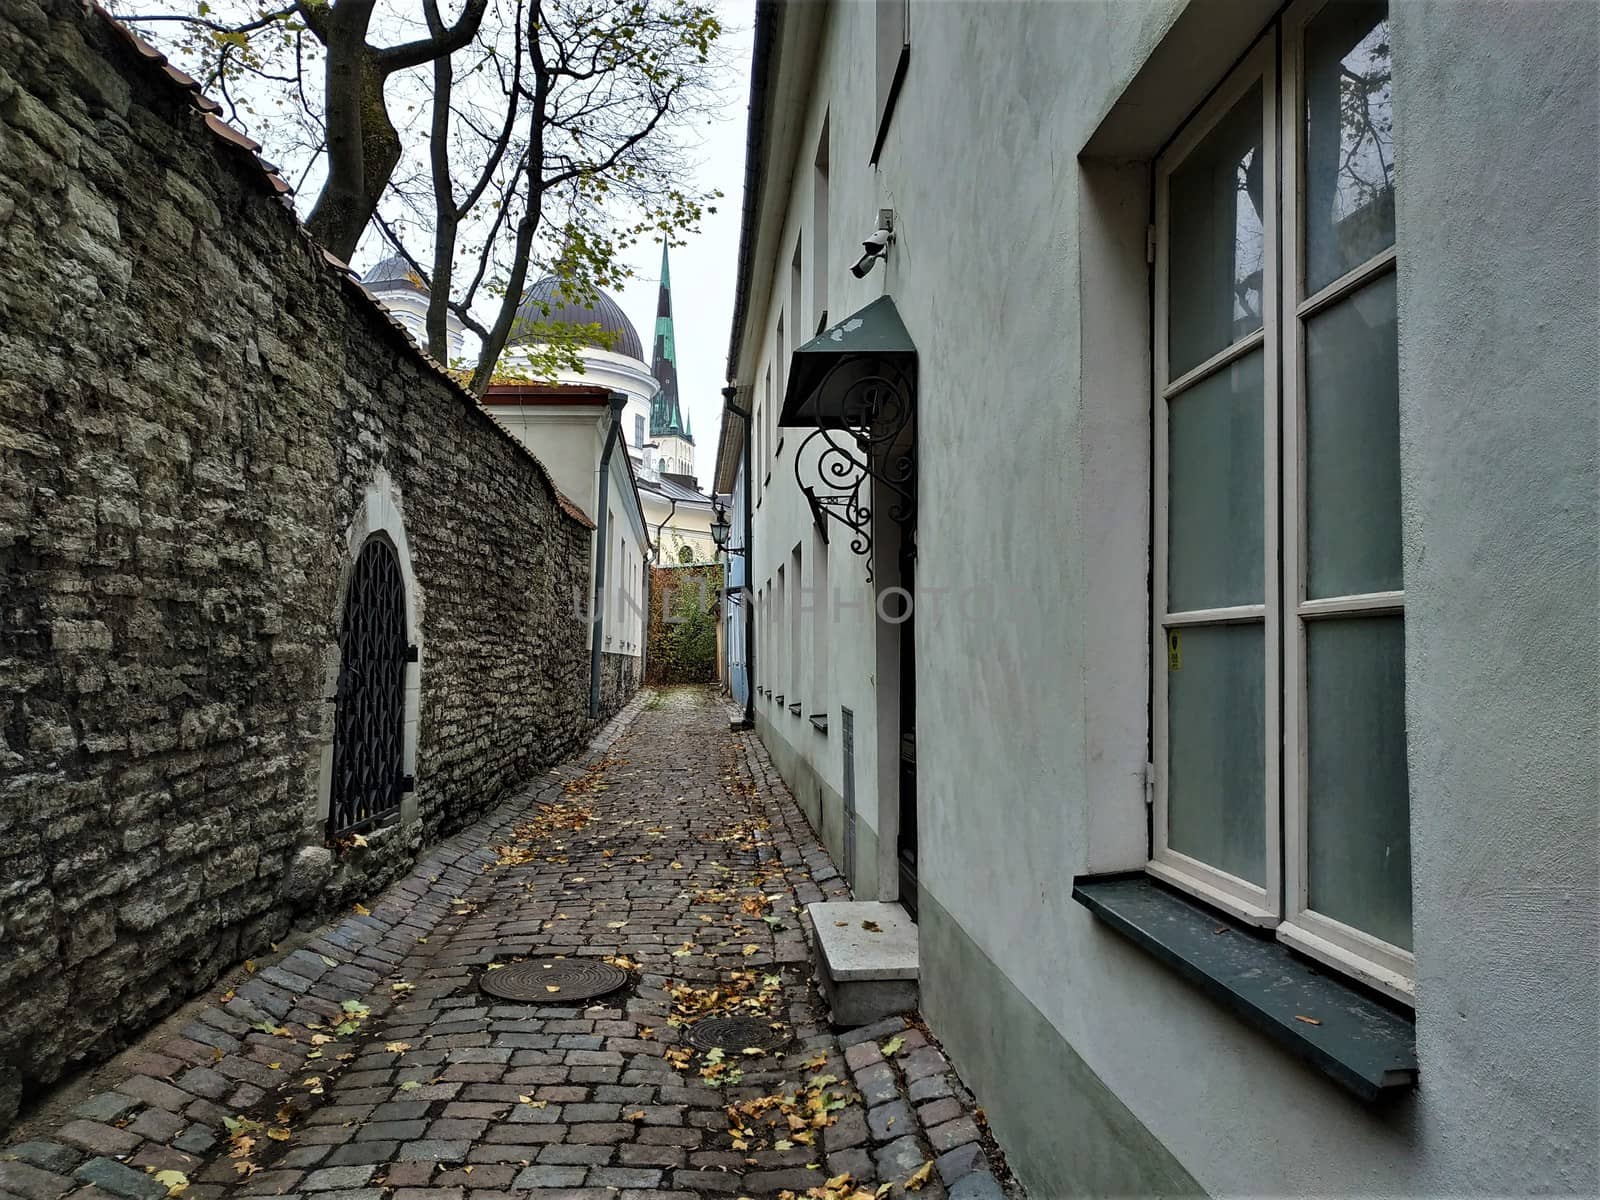 Narrow street near the town wall of Tallinn by pisces2386